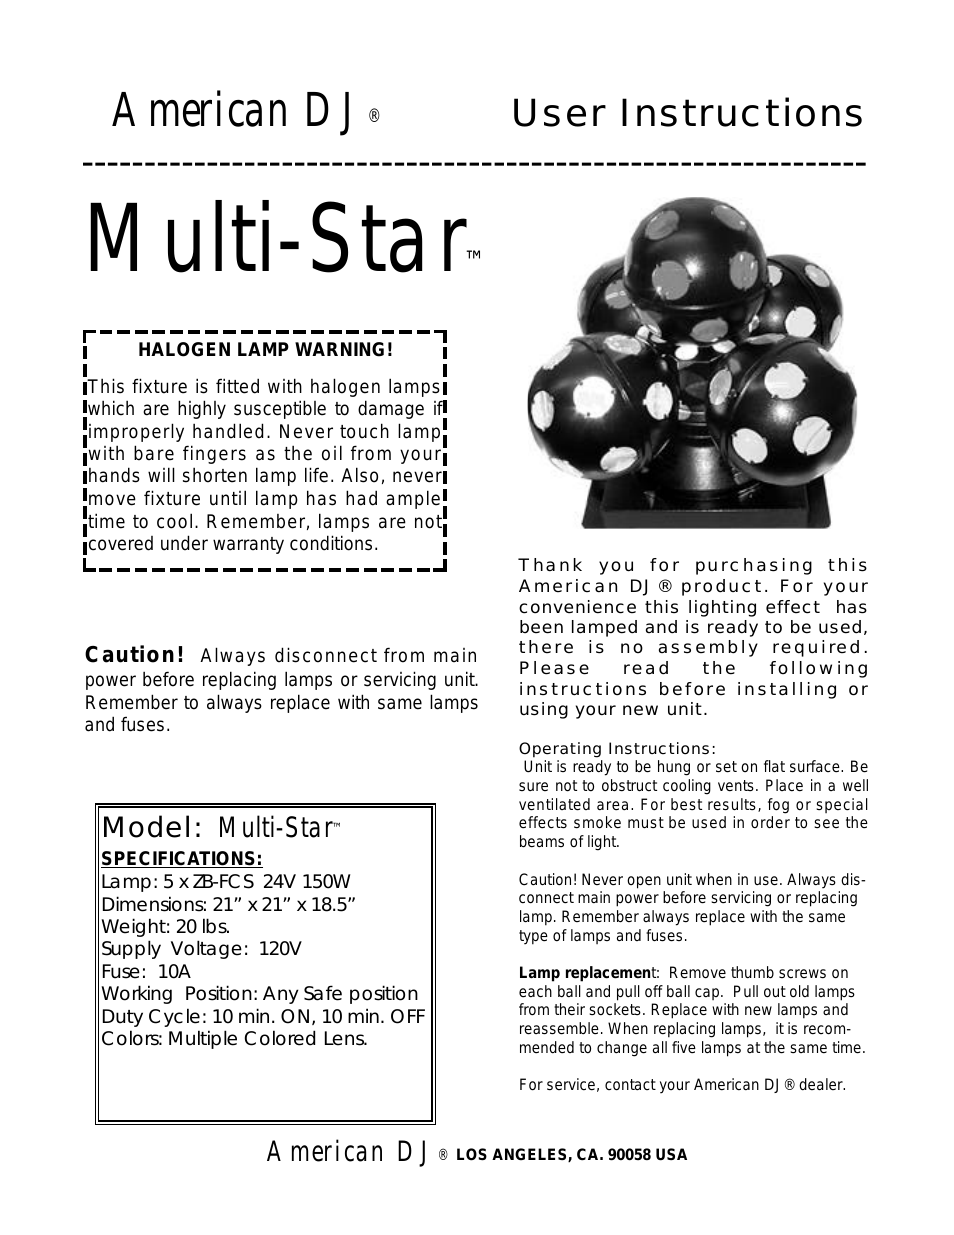 Multi-Star